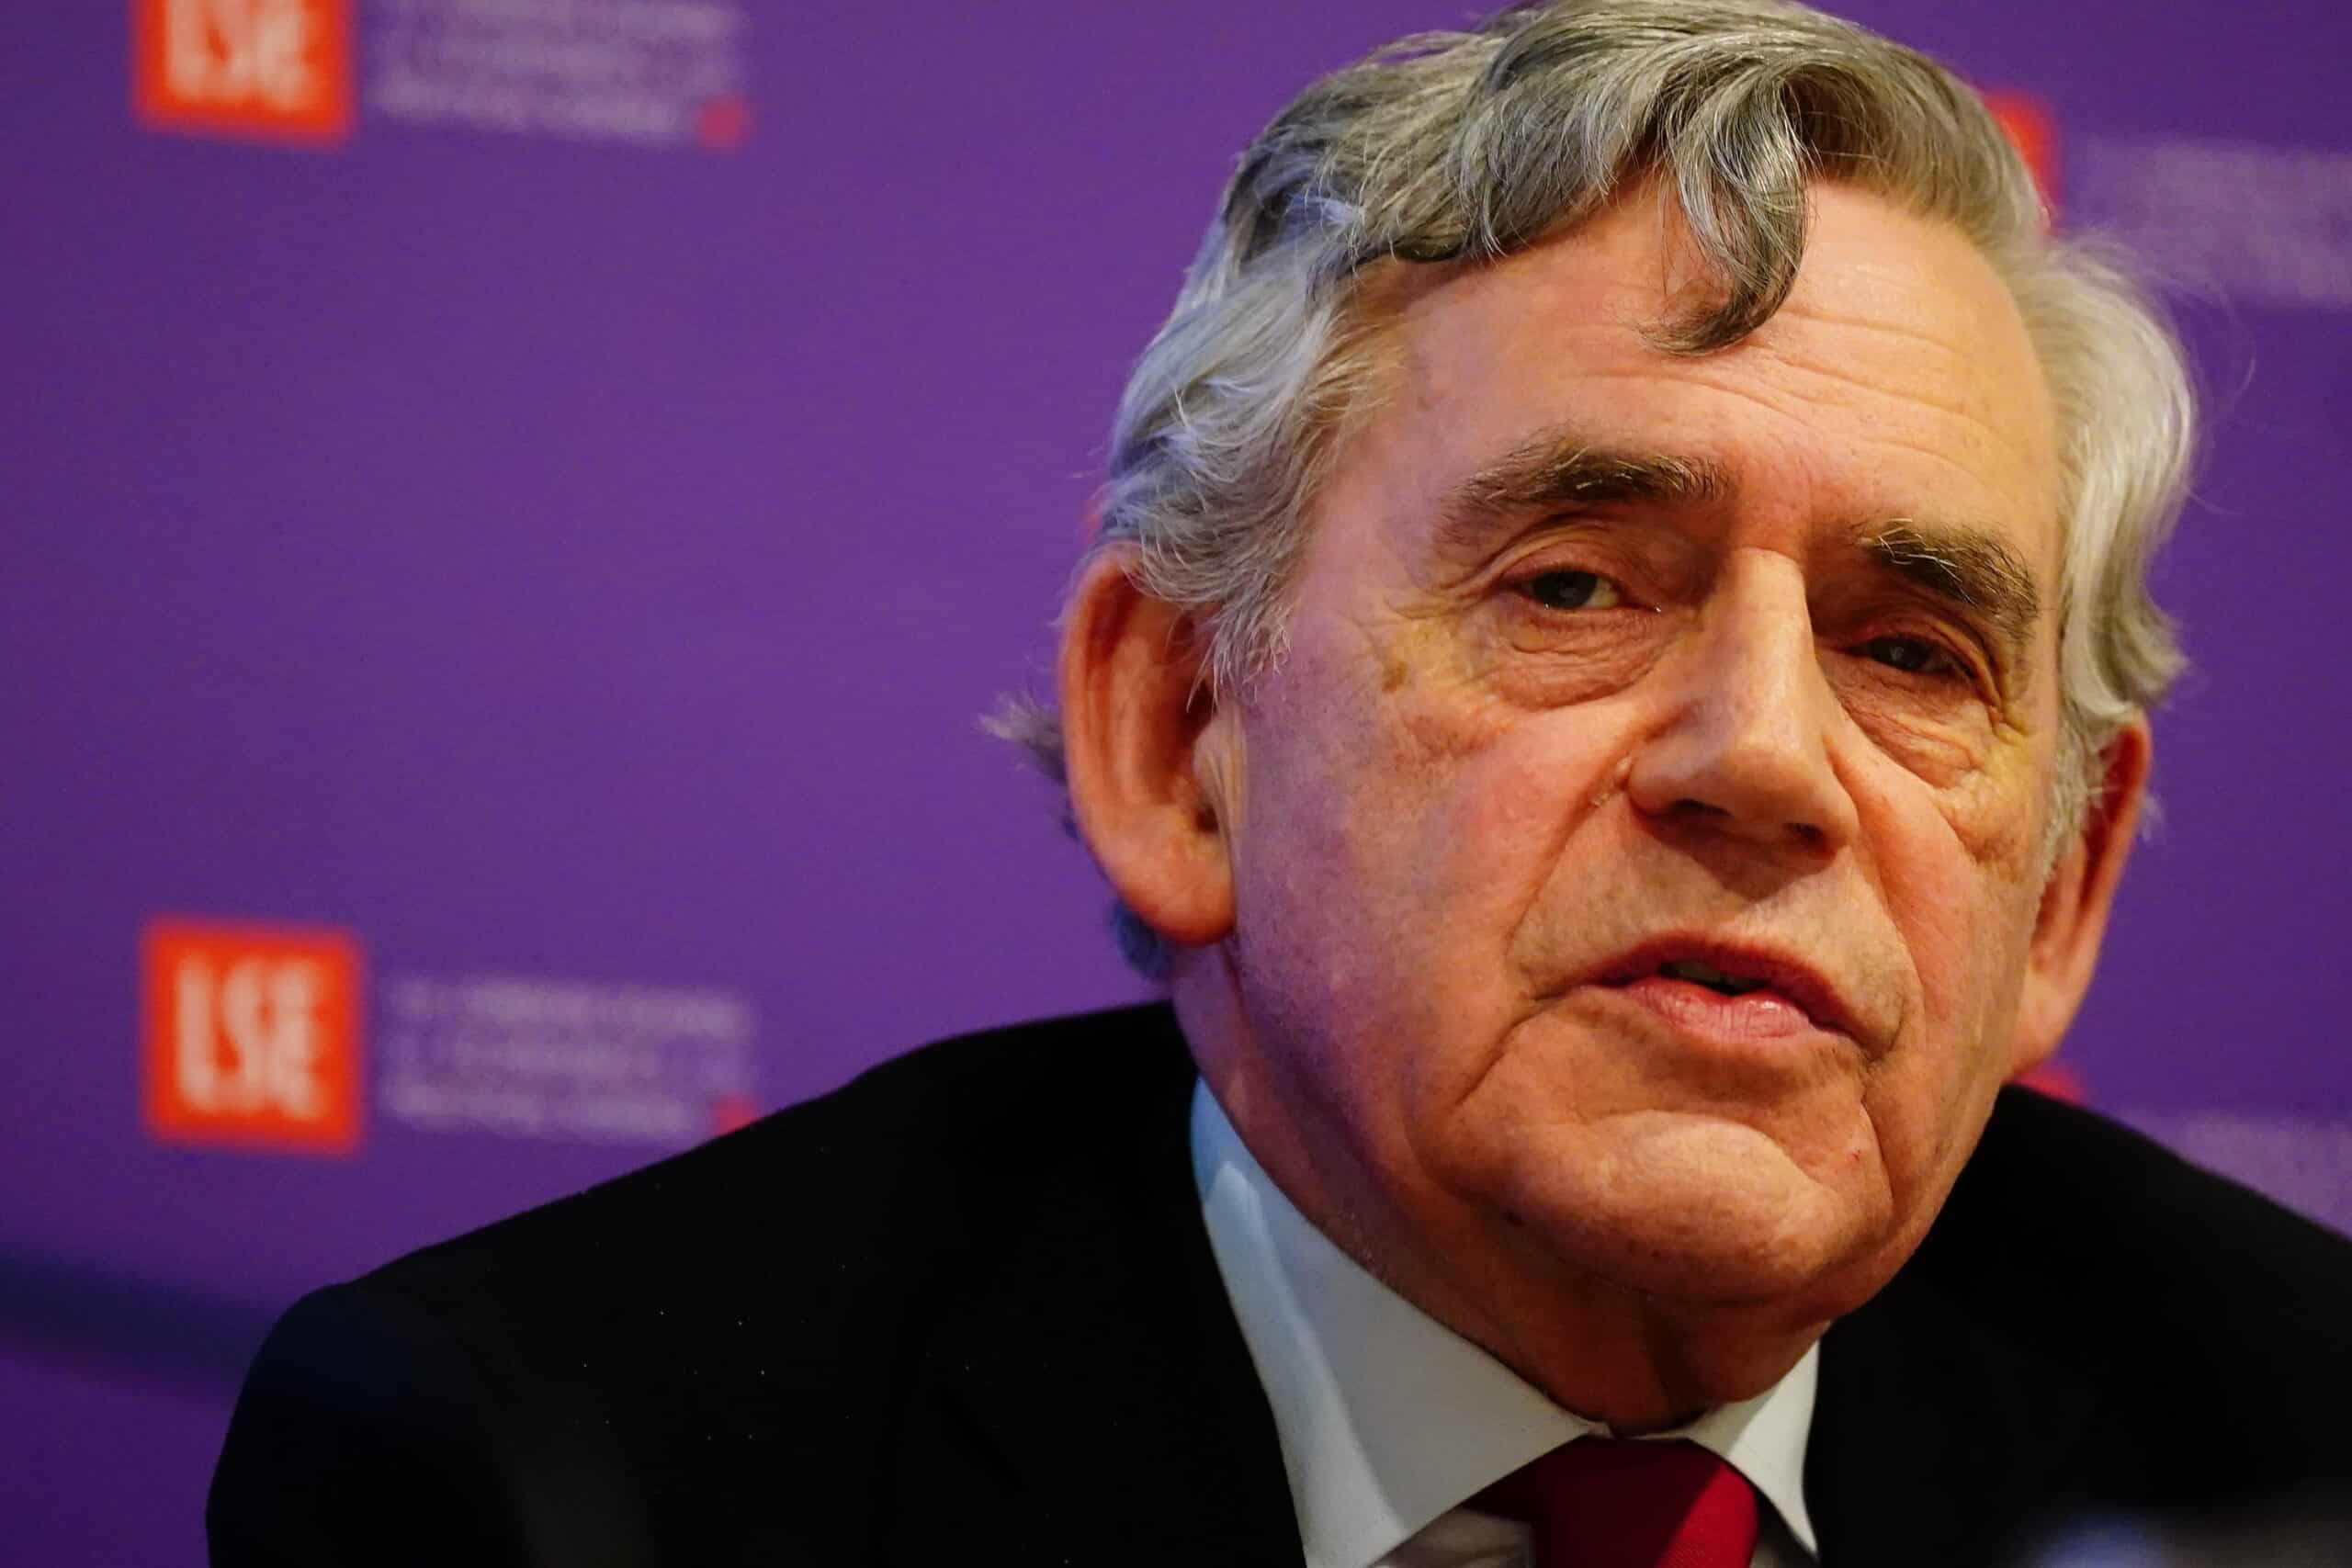 Gordon Brown warns of ‘poverty epidemic’